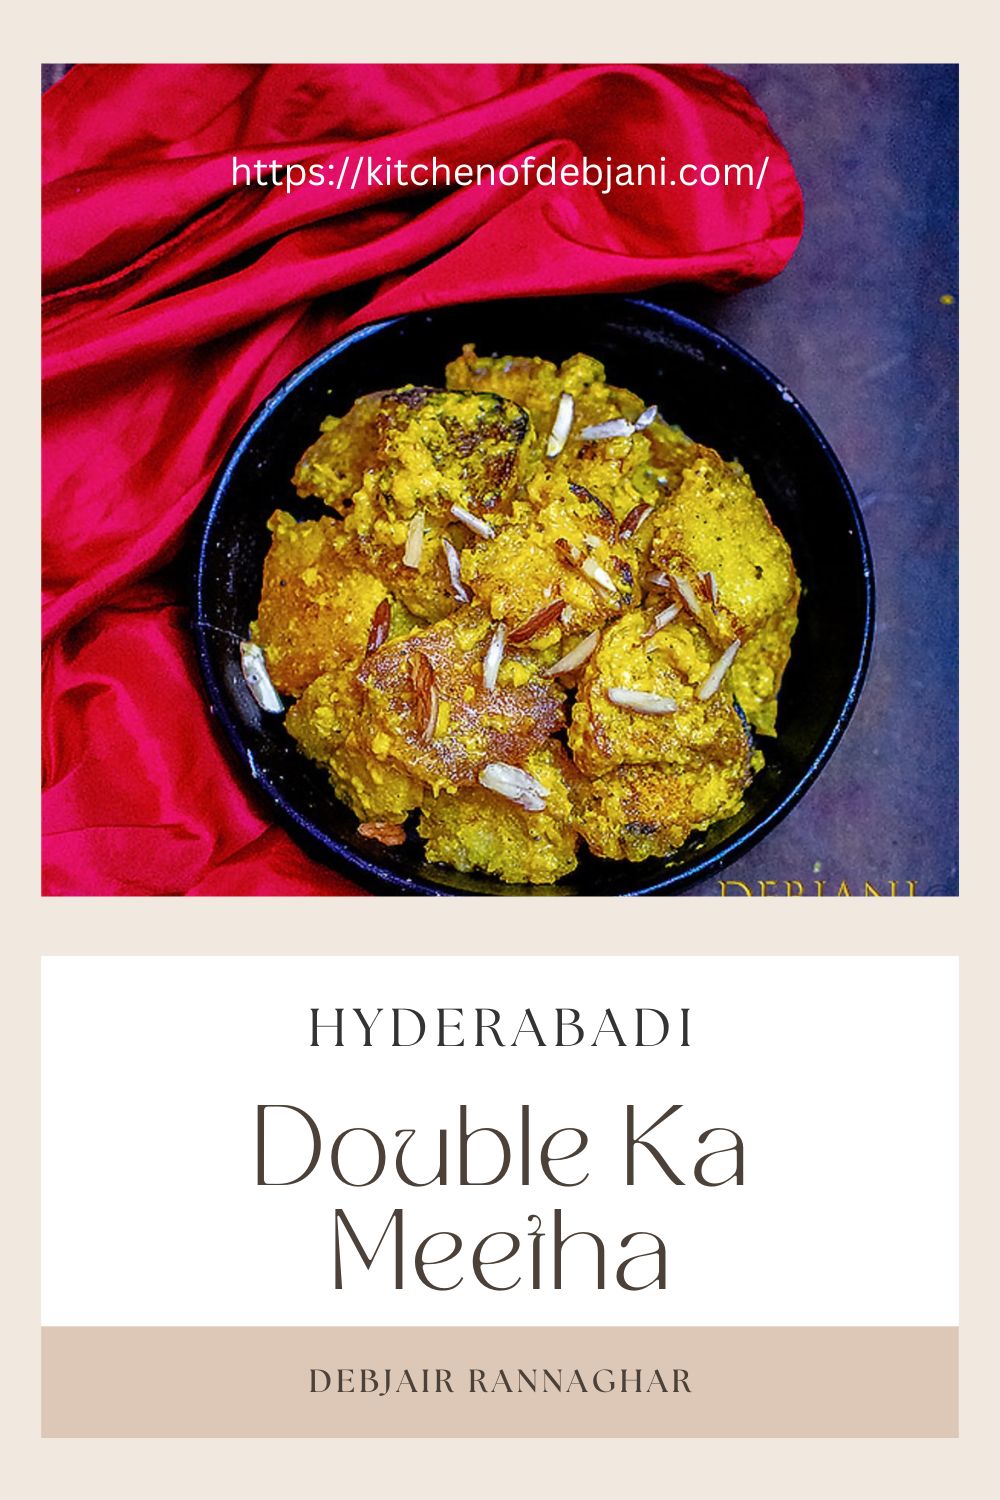 %Hyderabadi Double Ka Meetha Recipe Pinterest Graphic